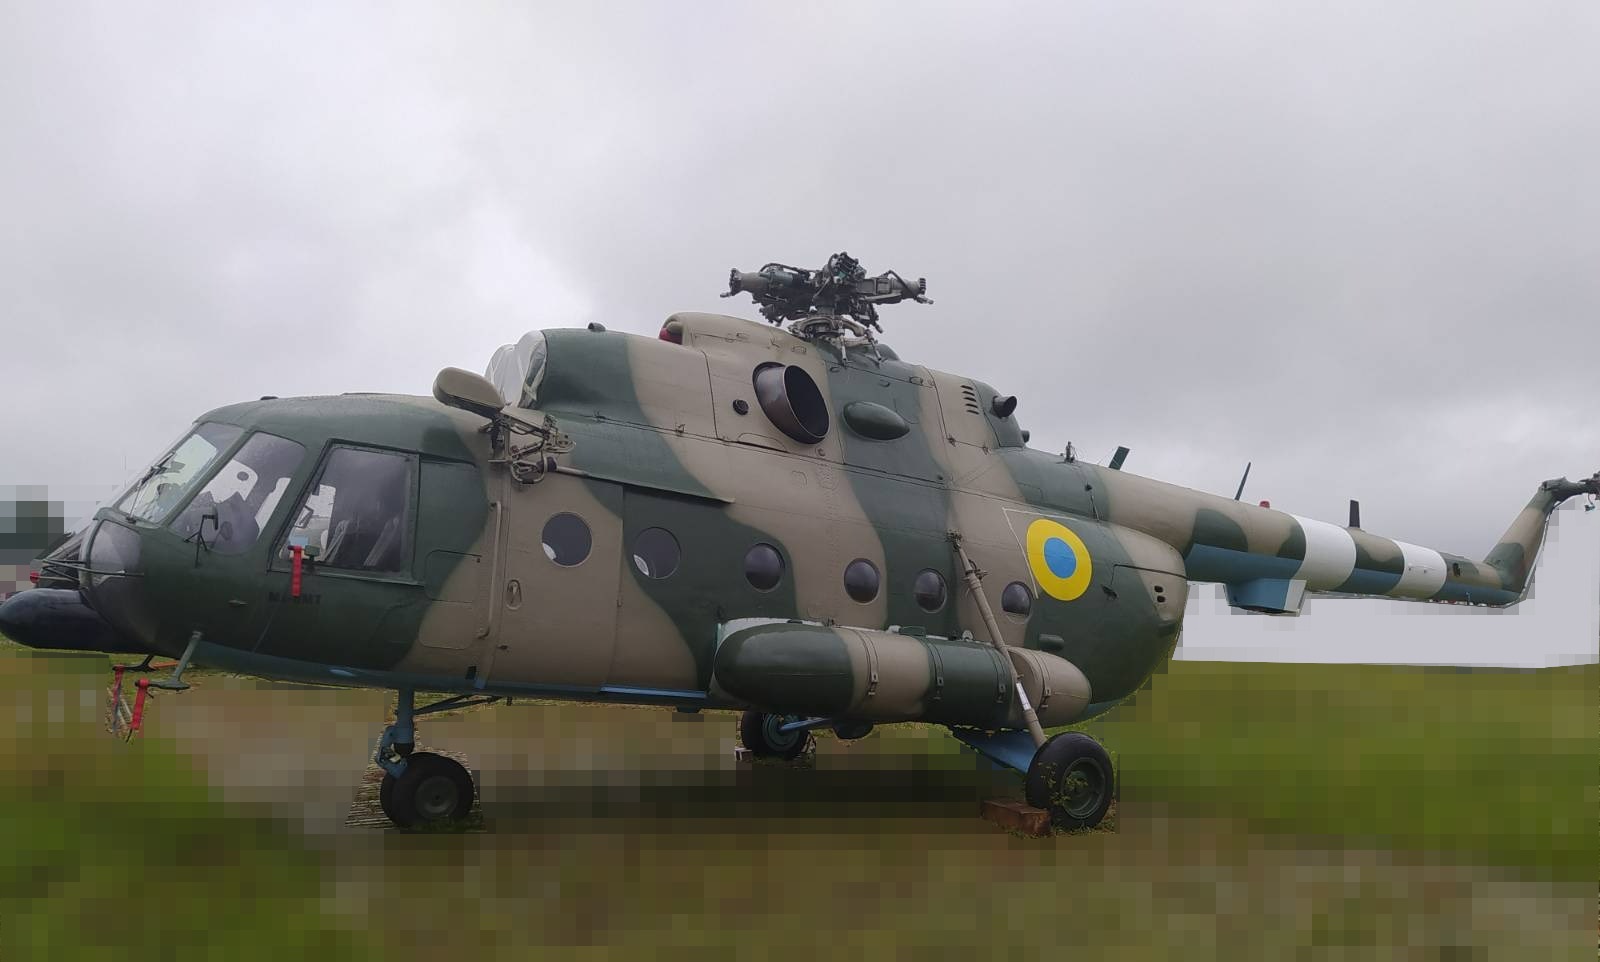 Латвия передала Украине по два вертолёта Ми-17 и Ми-2